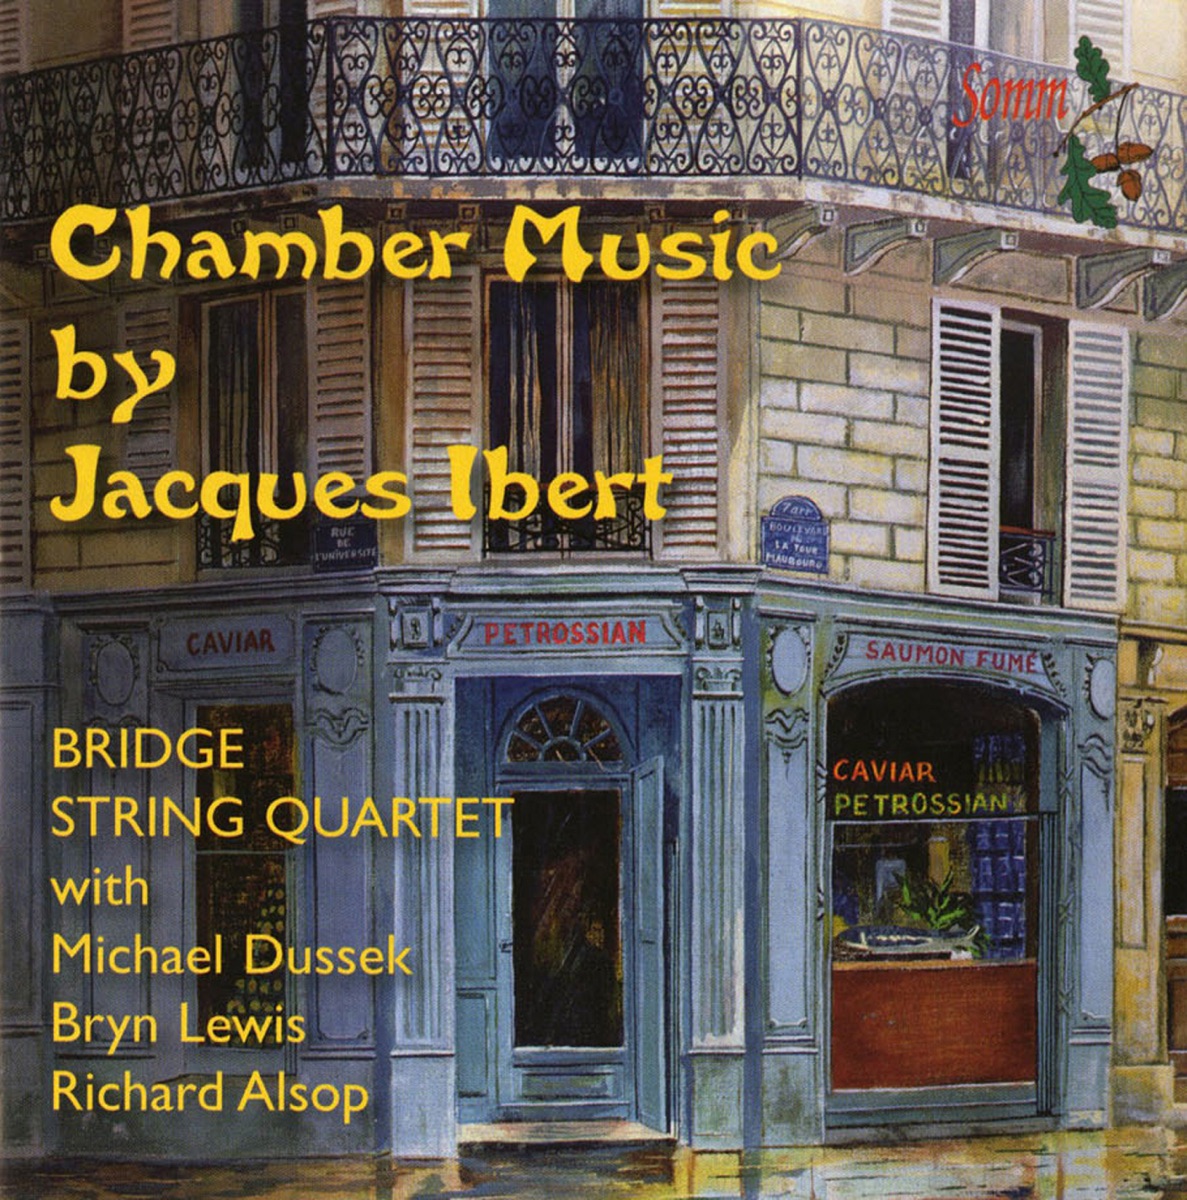 Frank Bridge: Chamber Music - Album by Bridge String Quartet - Apple Music